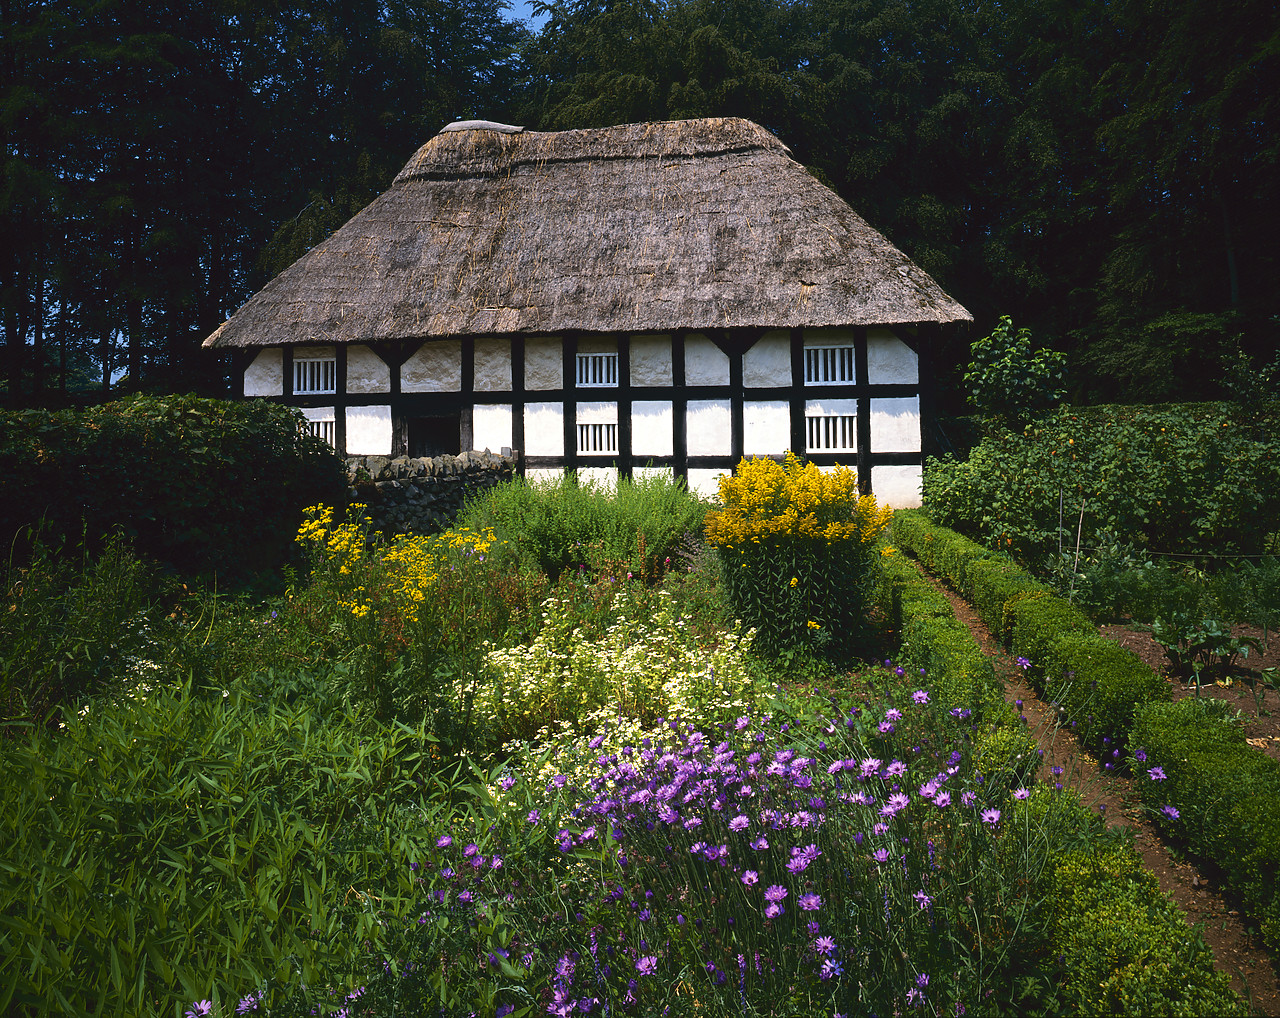 #903021-2 - Timber-framed Farmhouse, Welsh Folk Museum, St. Fagans, Cardiff, Wales